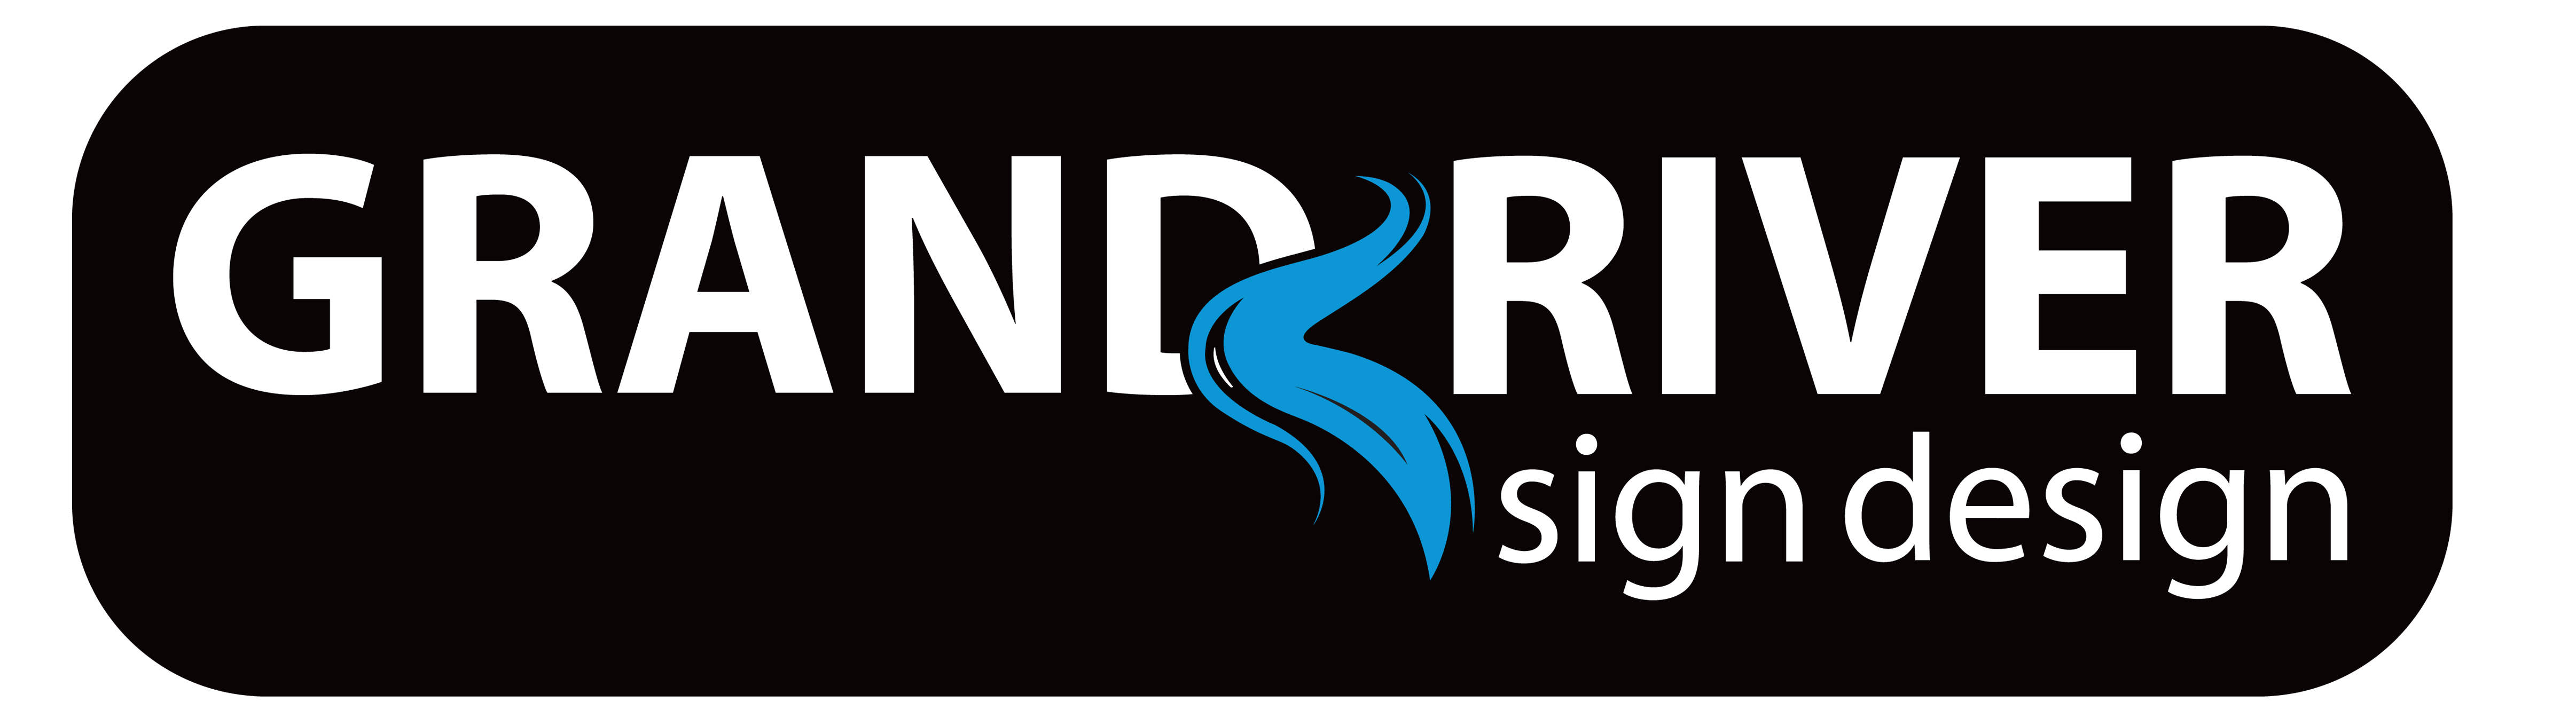 Grand River Sign Design - Signage & Displays Ontario, Canada